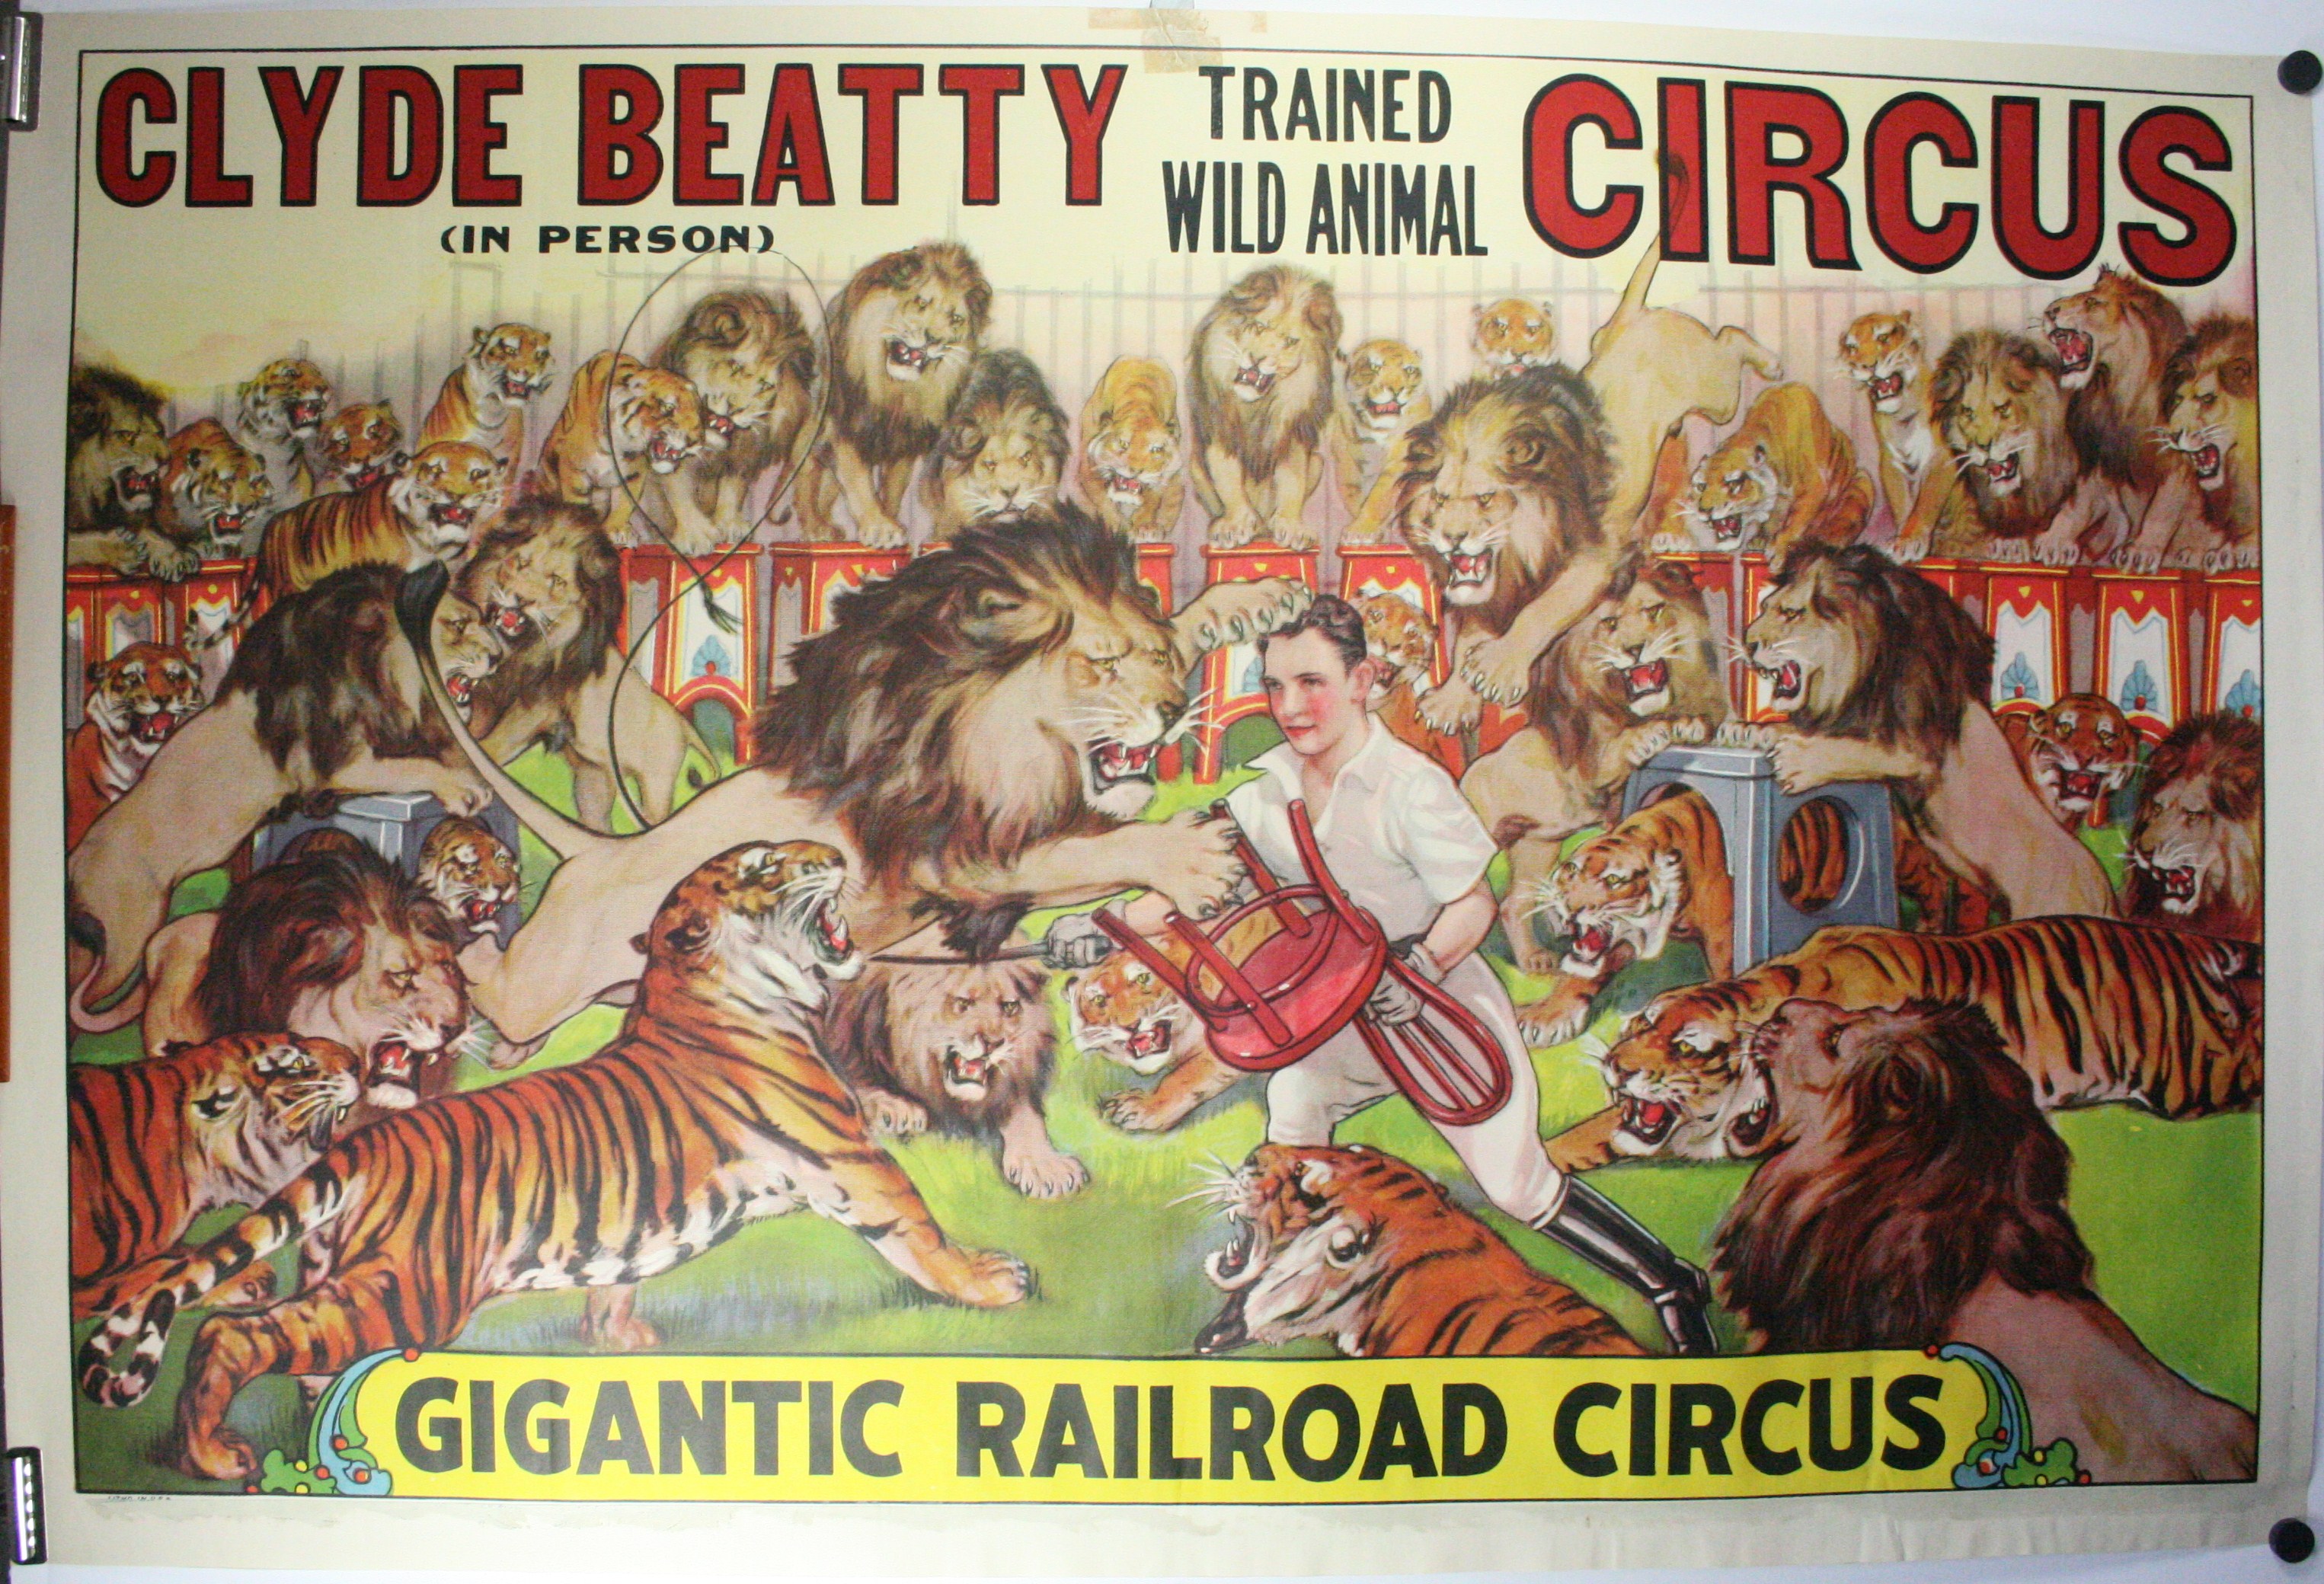 CLYDE BEATTY GIGANTIC RAILROAD CIRCUS, Original Vintage Circus Poster